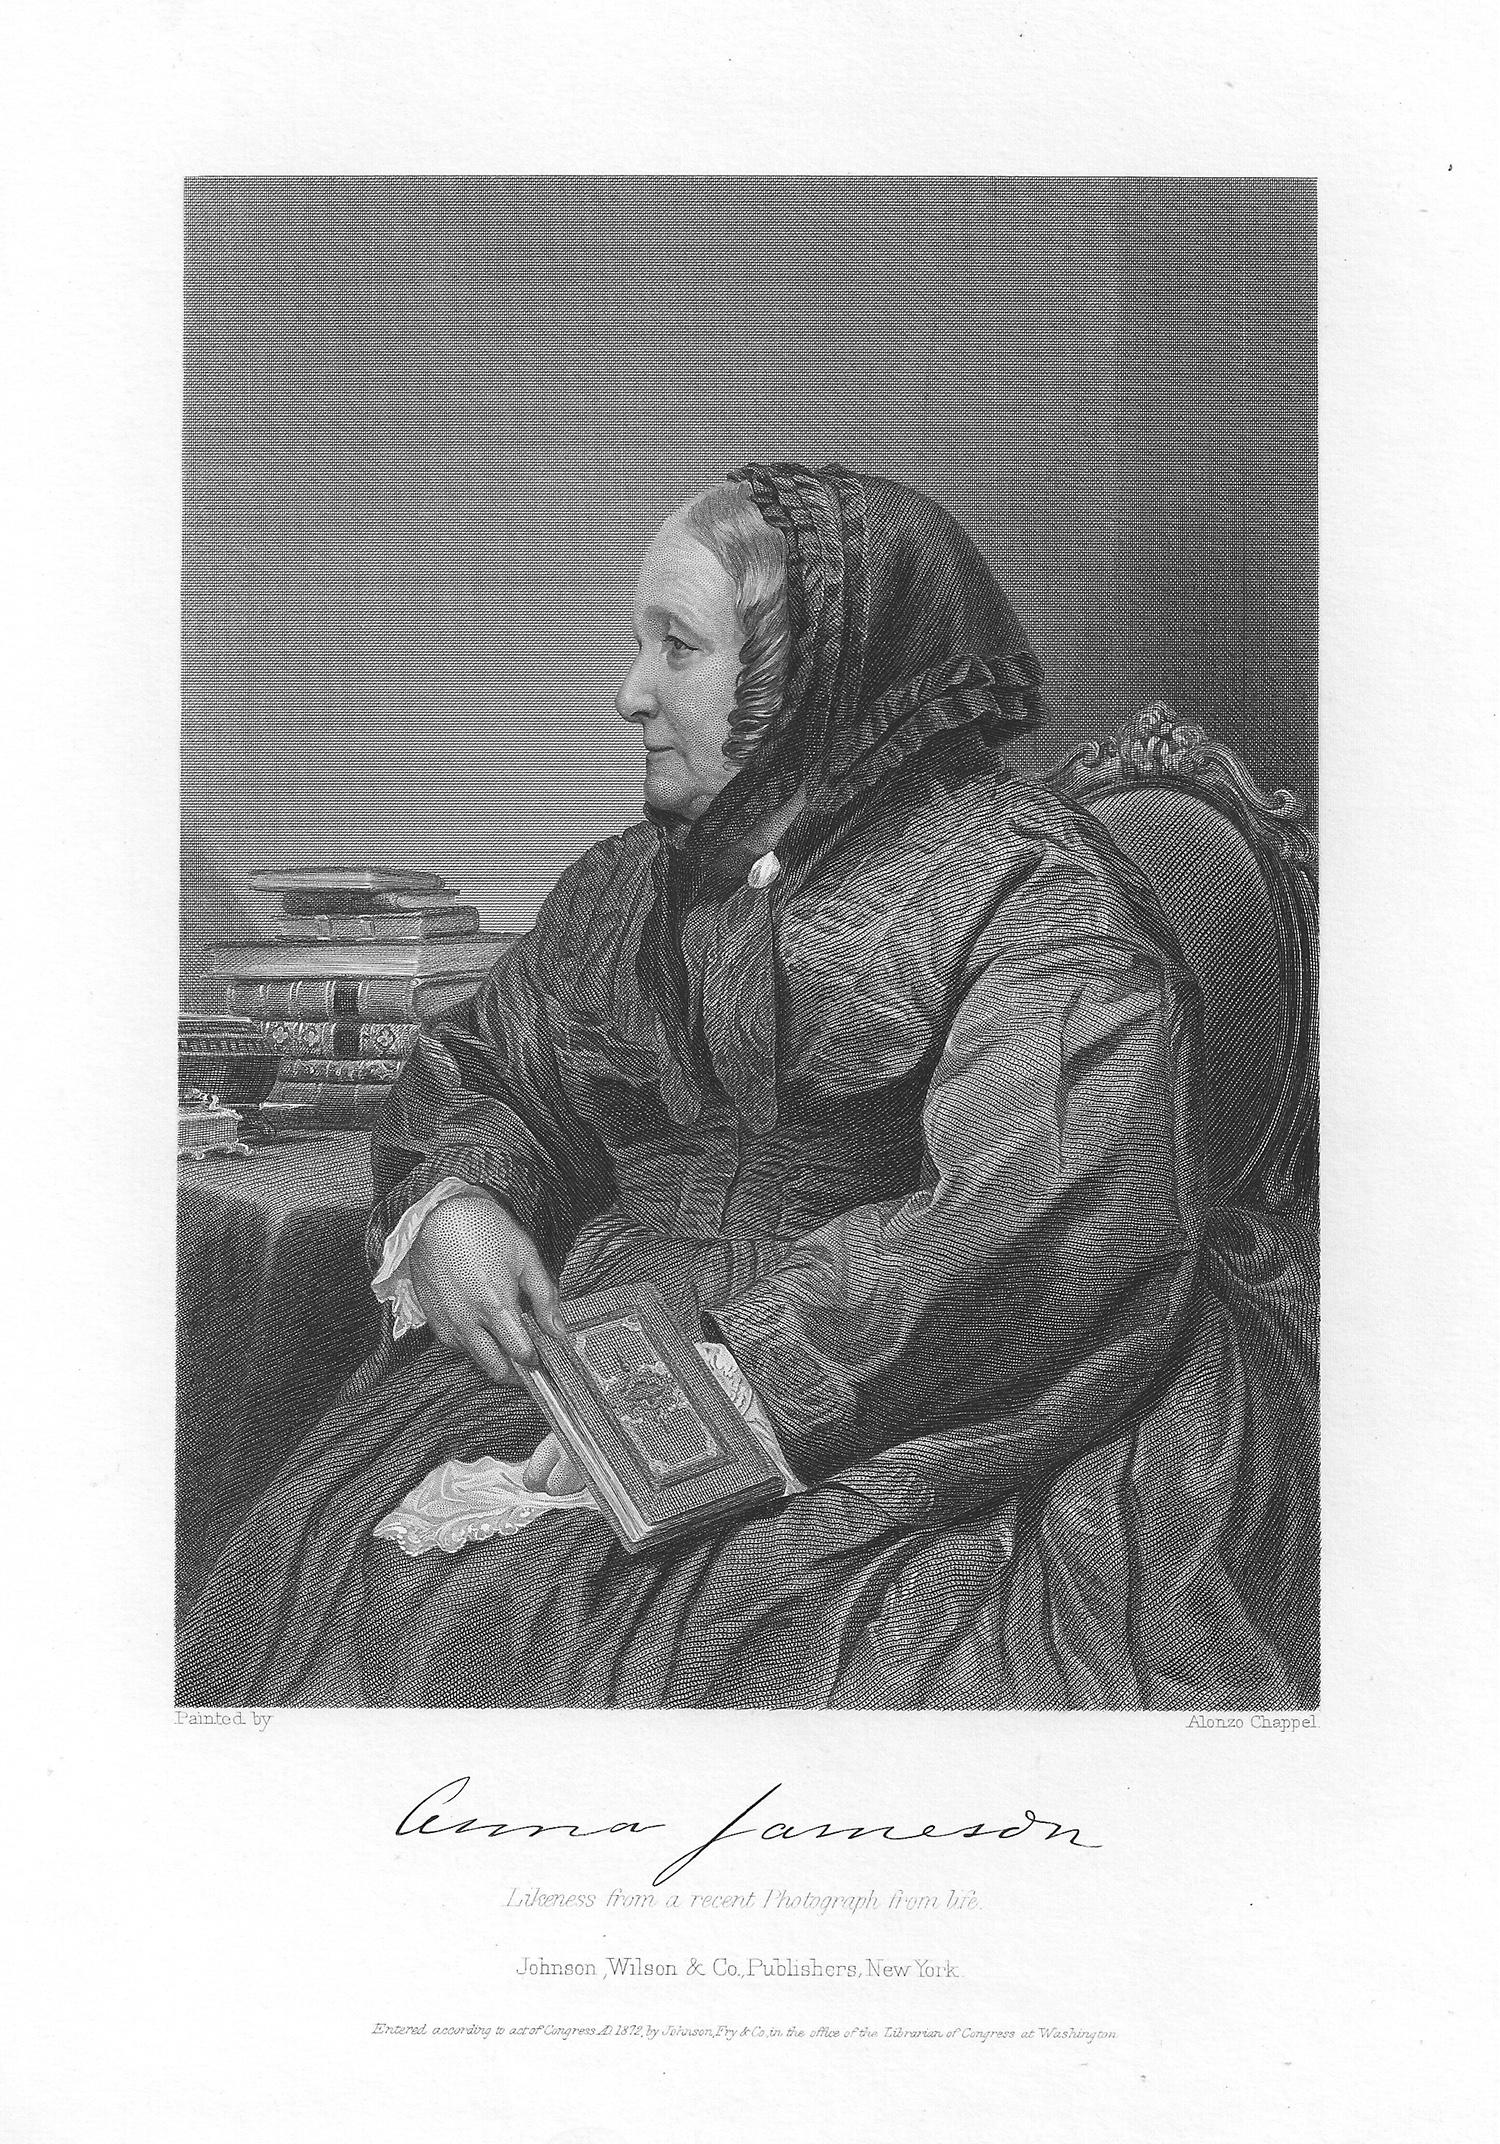 Alonzo Chappel Portrait Print - Anna Jameson, English writer and feminist, antique portrait engraving print